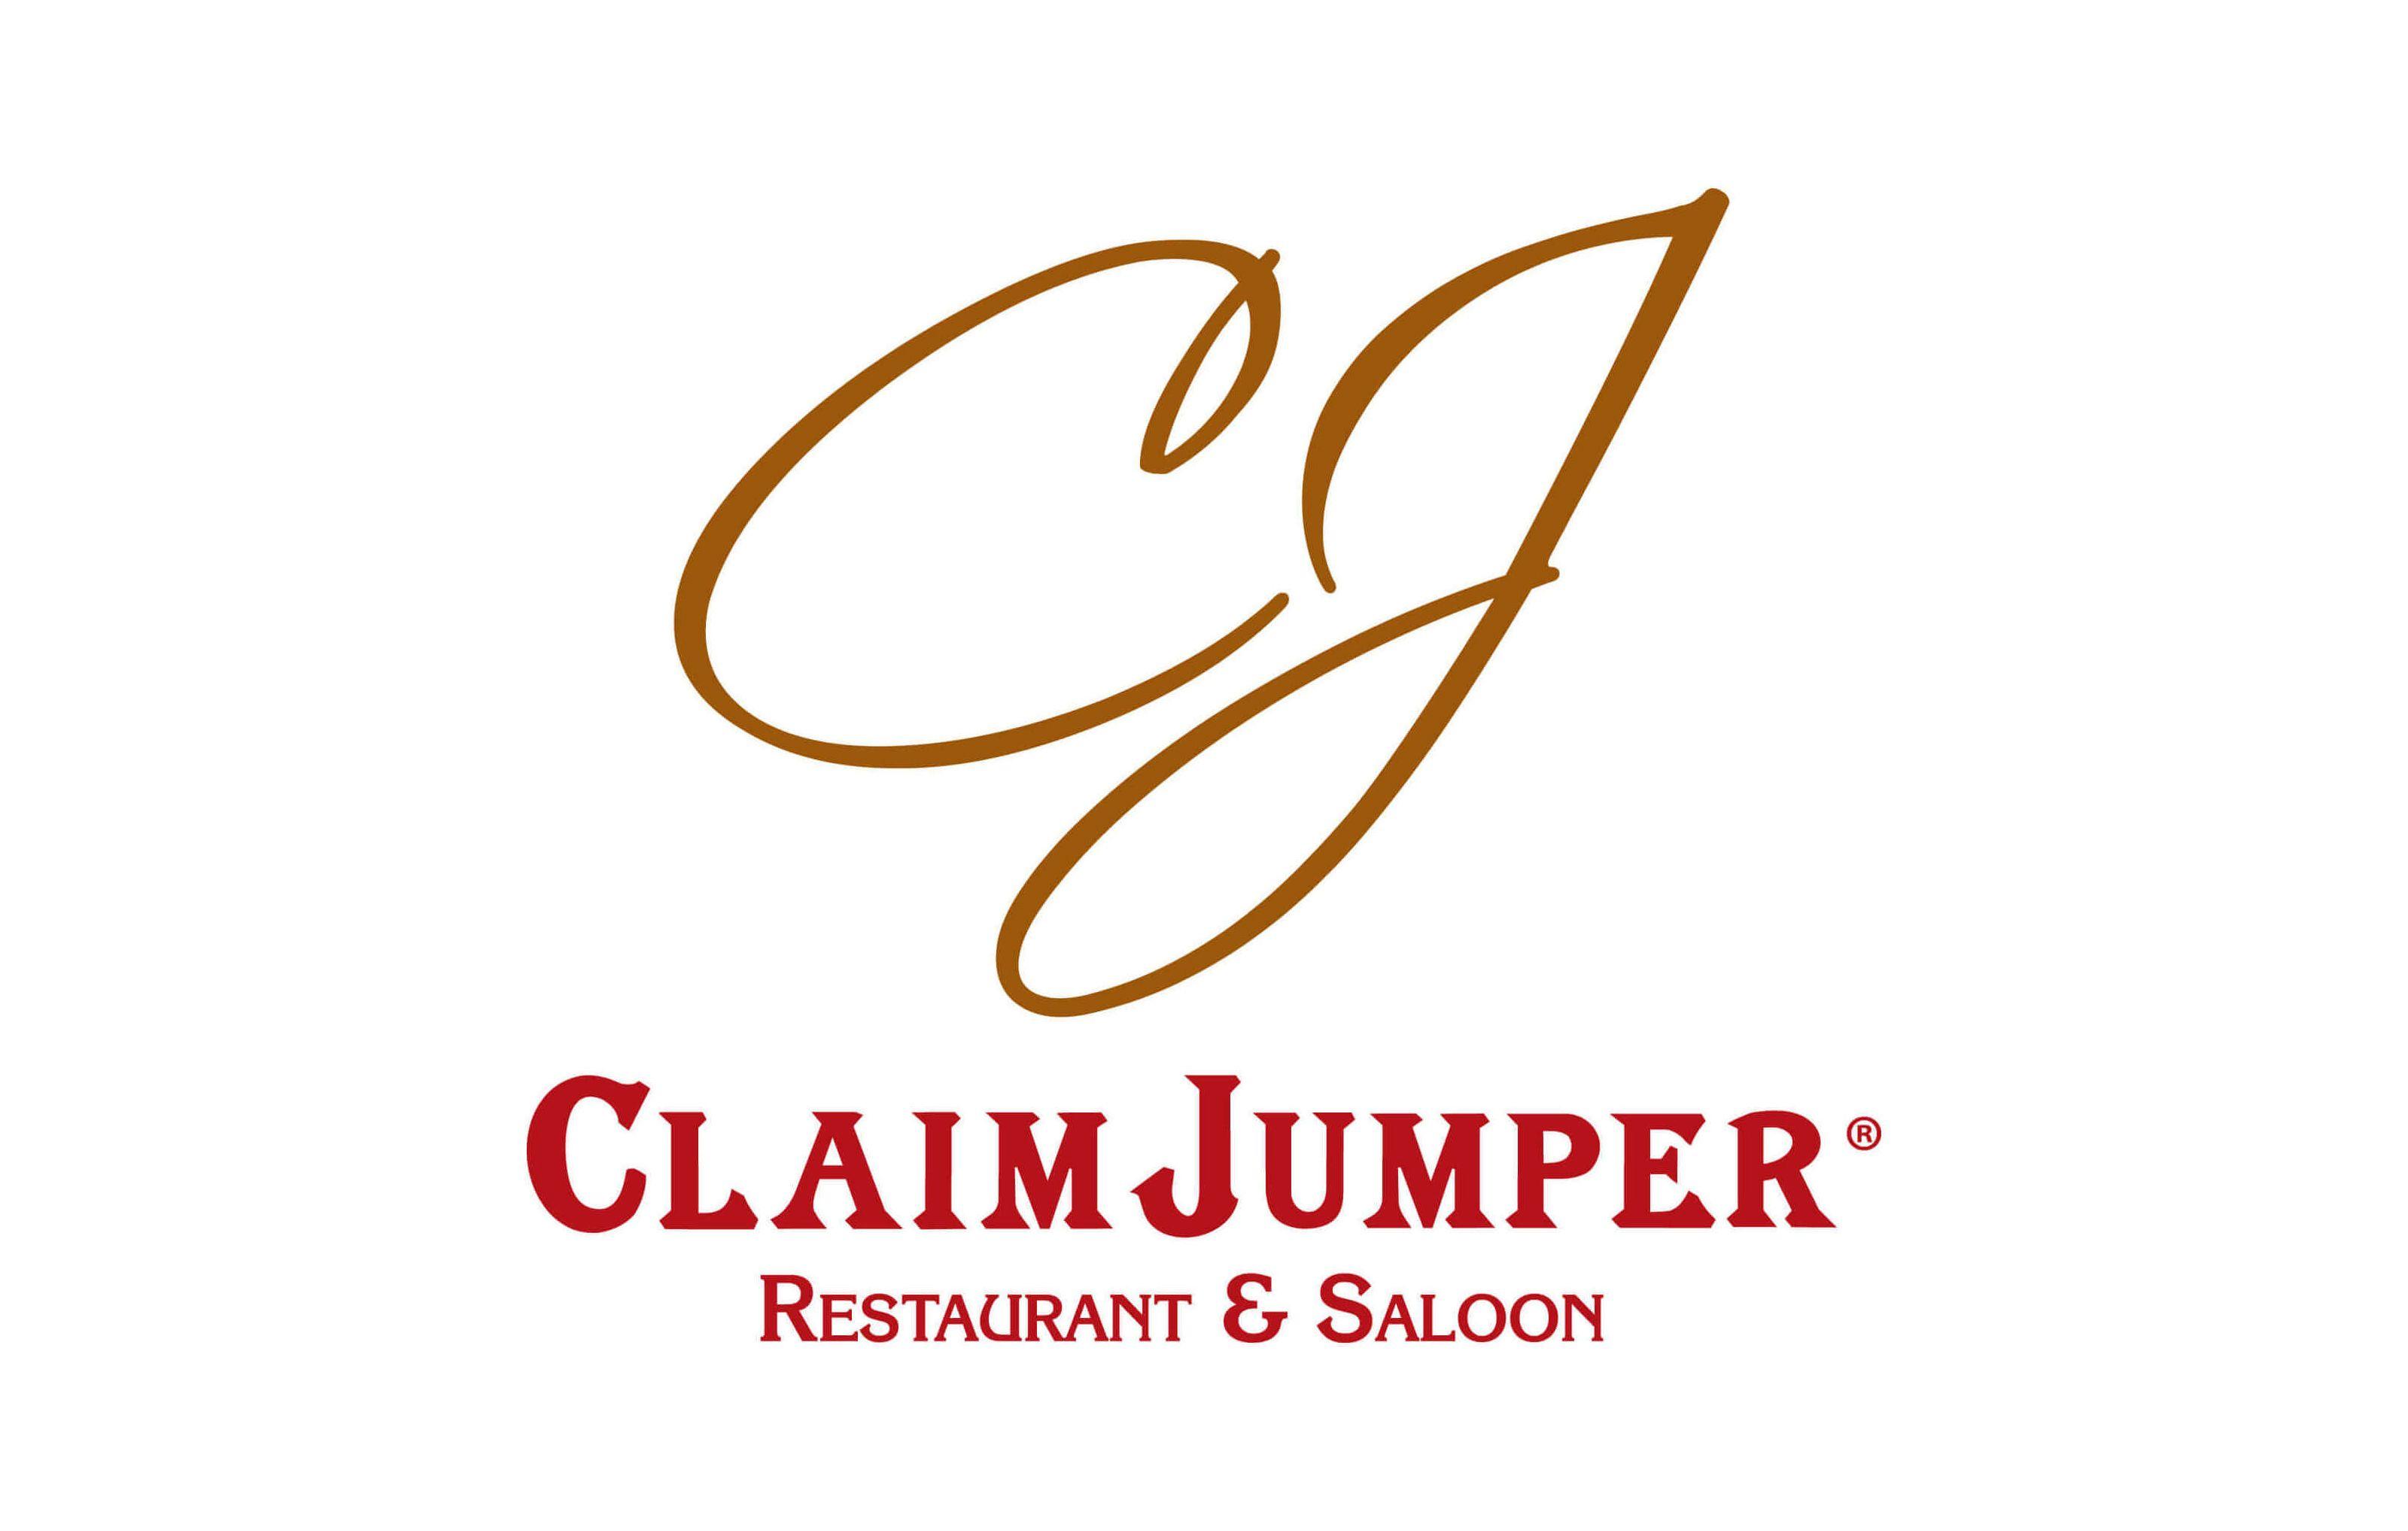 HR Oval Restaurant Logo - Claim Jumper Restaurants